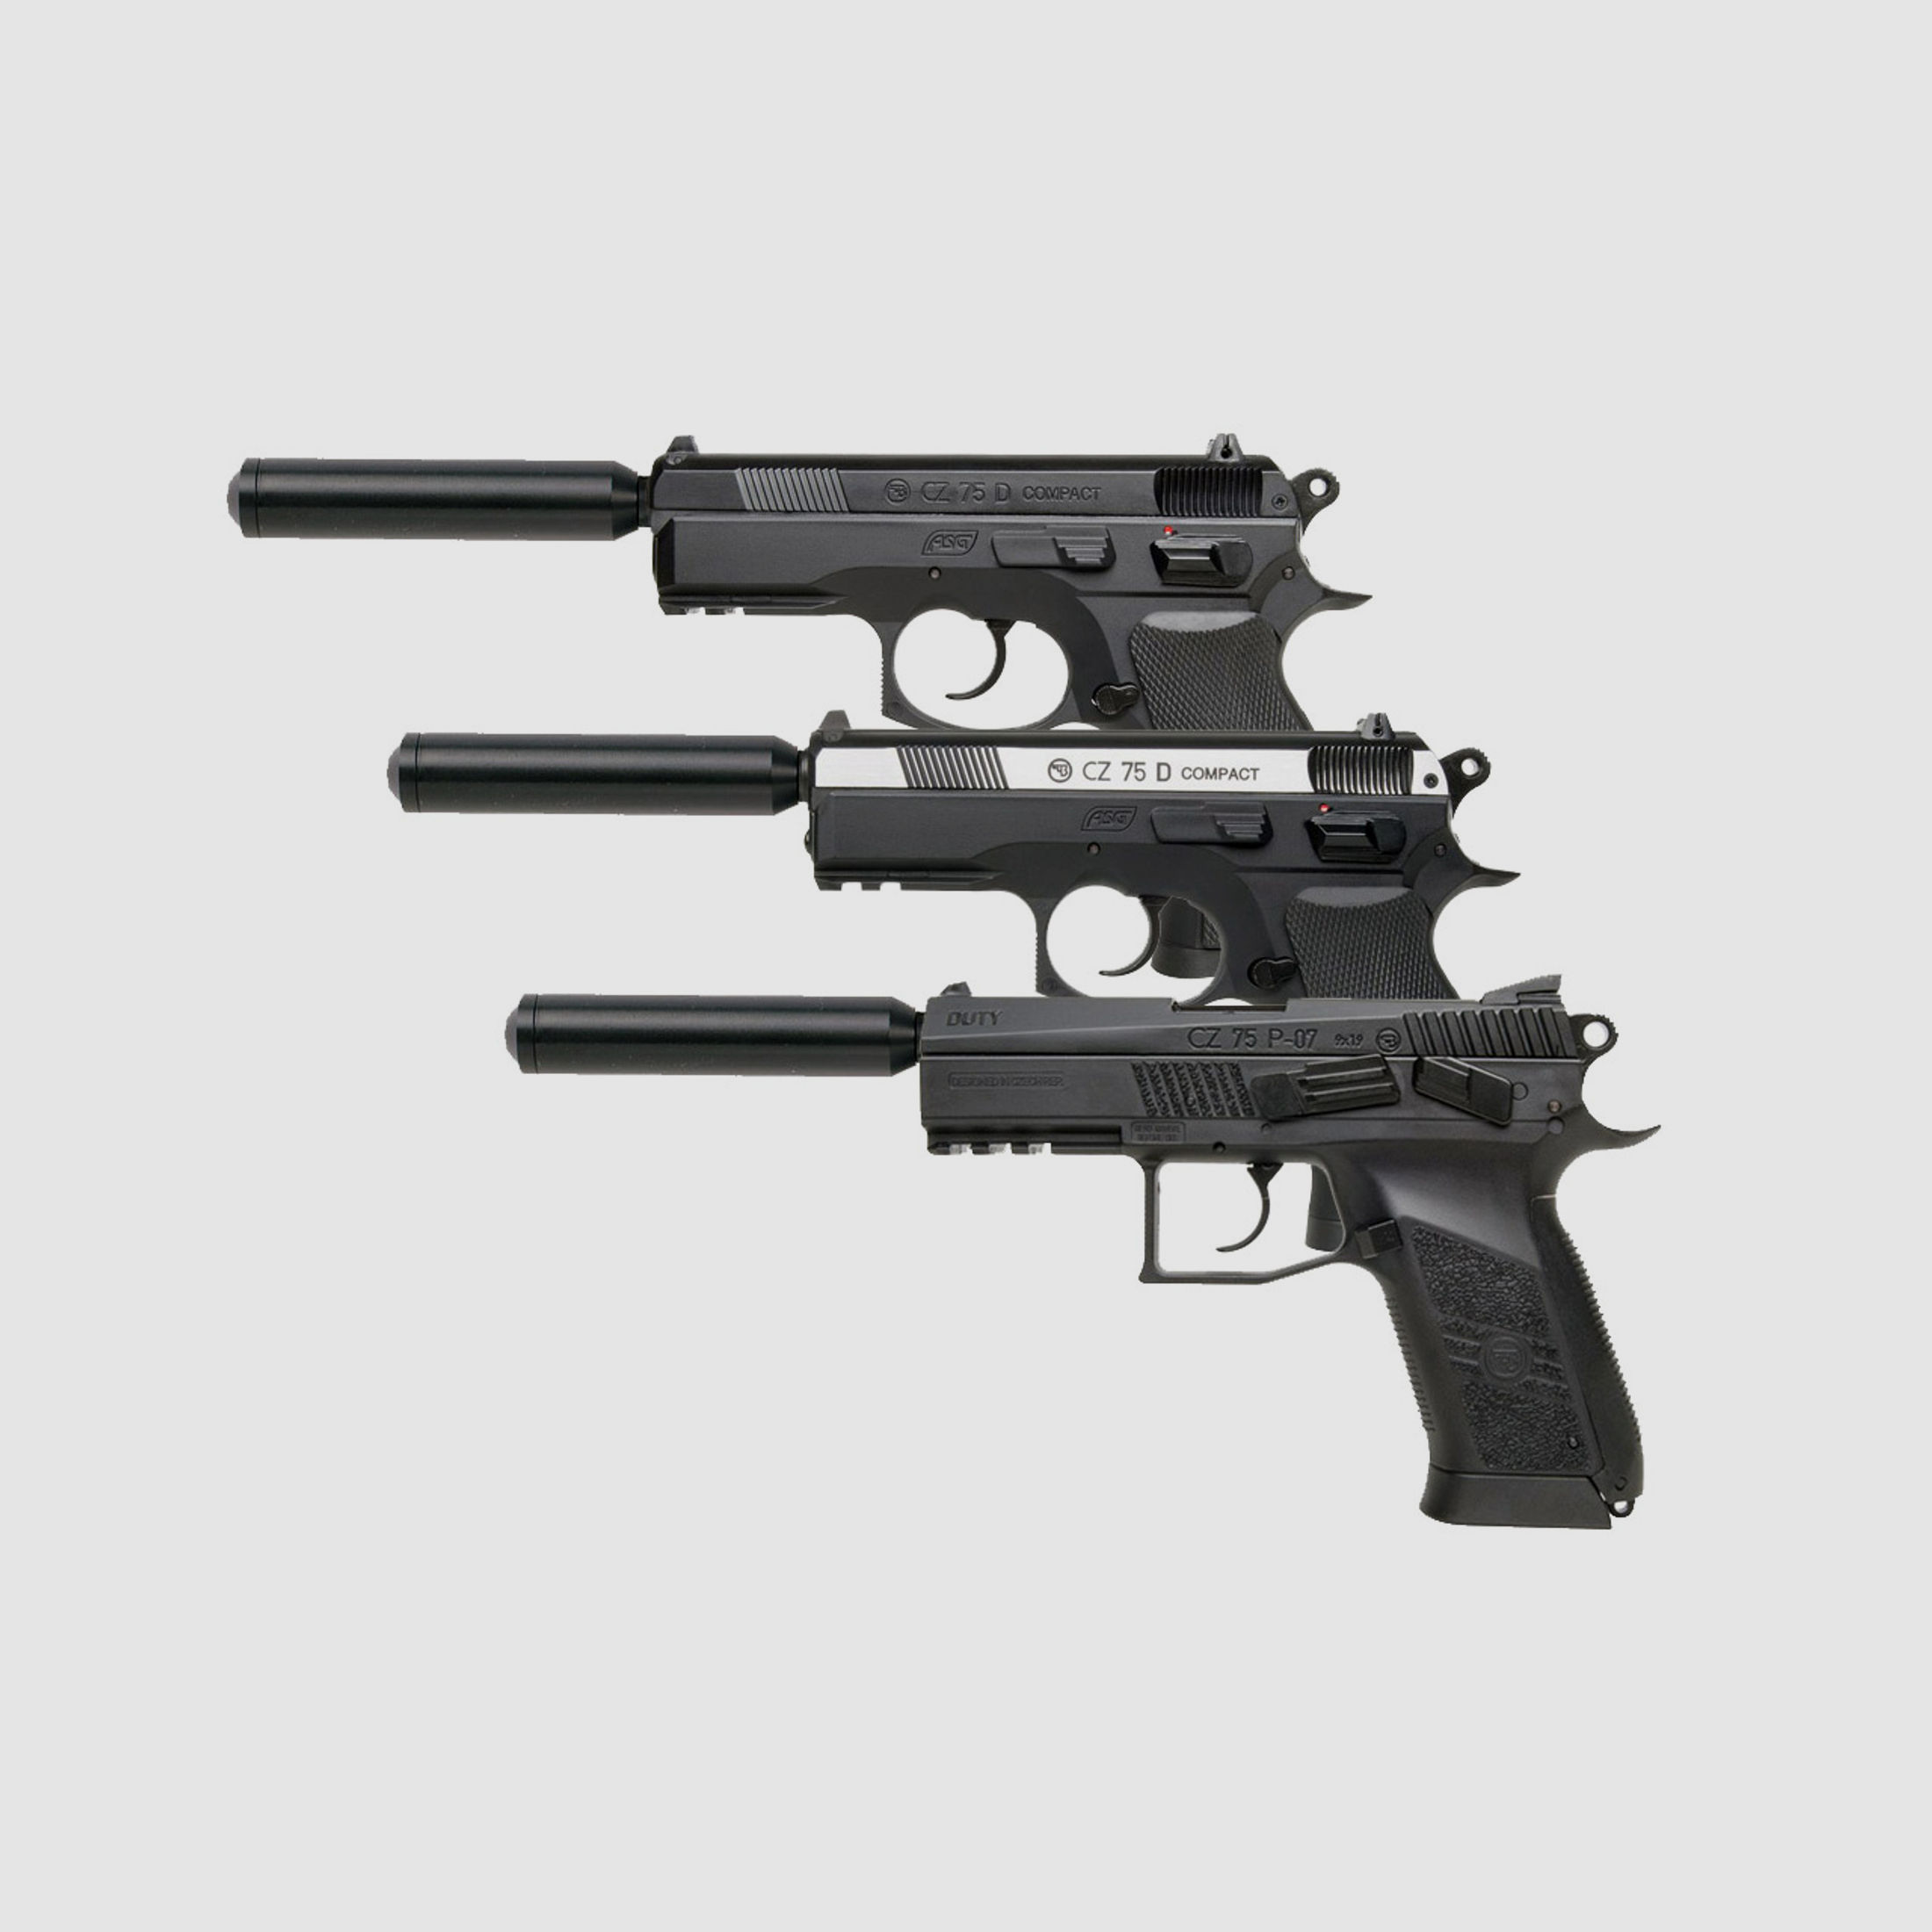 SWS SchalldĂ¤mpferadapter und SchalldĂ¤mpfer fĂĽr CO2 Pistolen CZ Modelle 75 (P18)